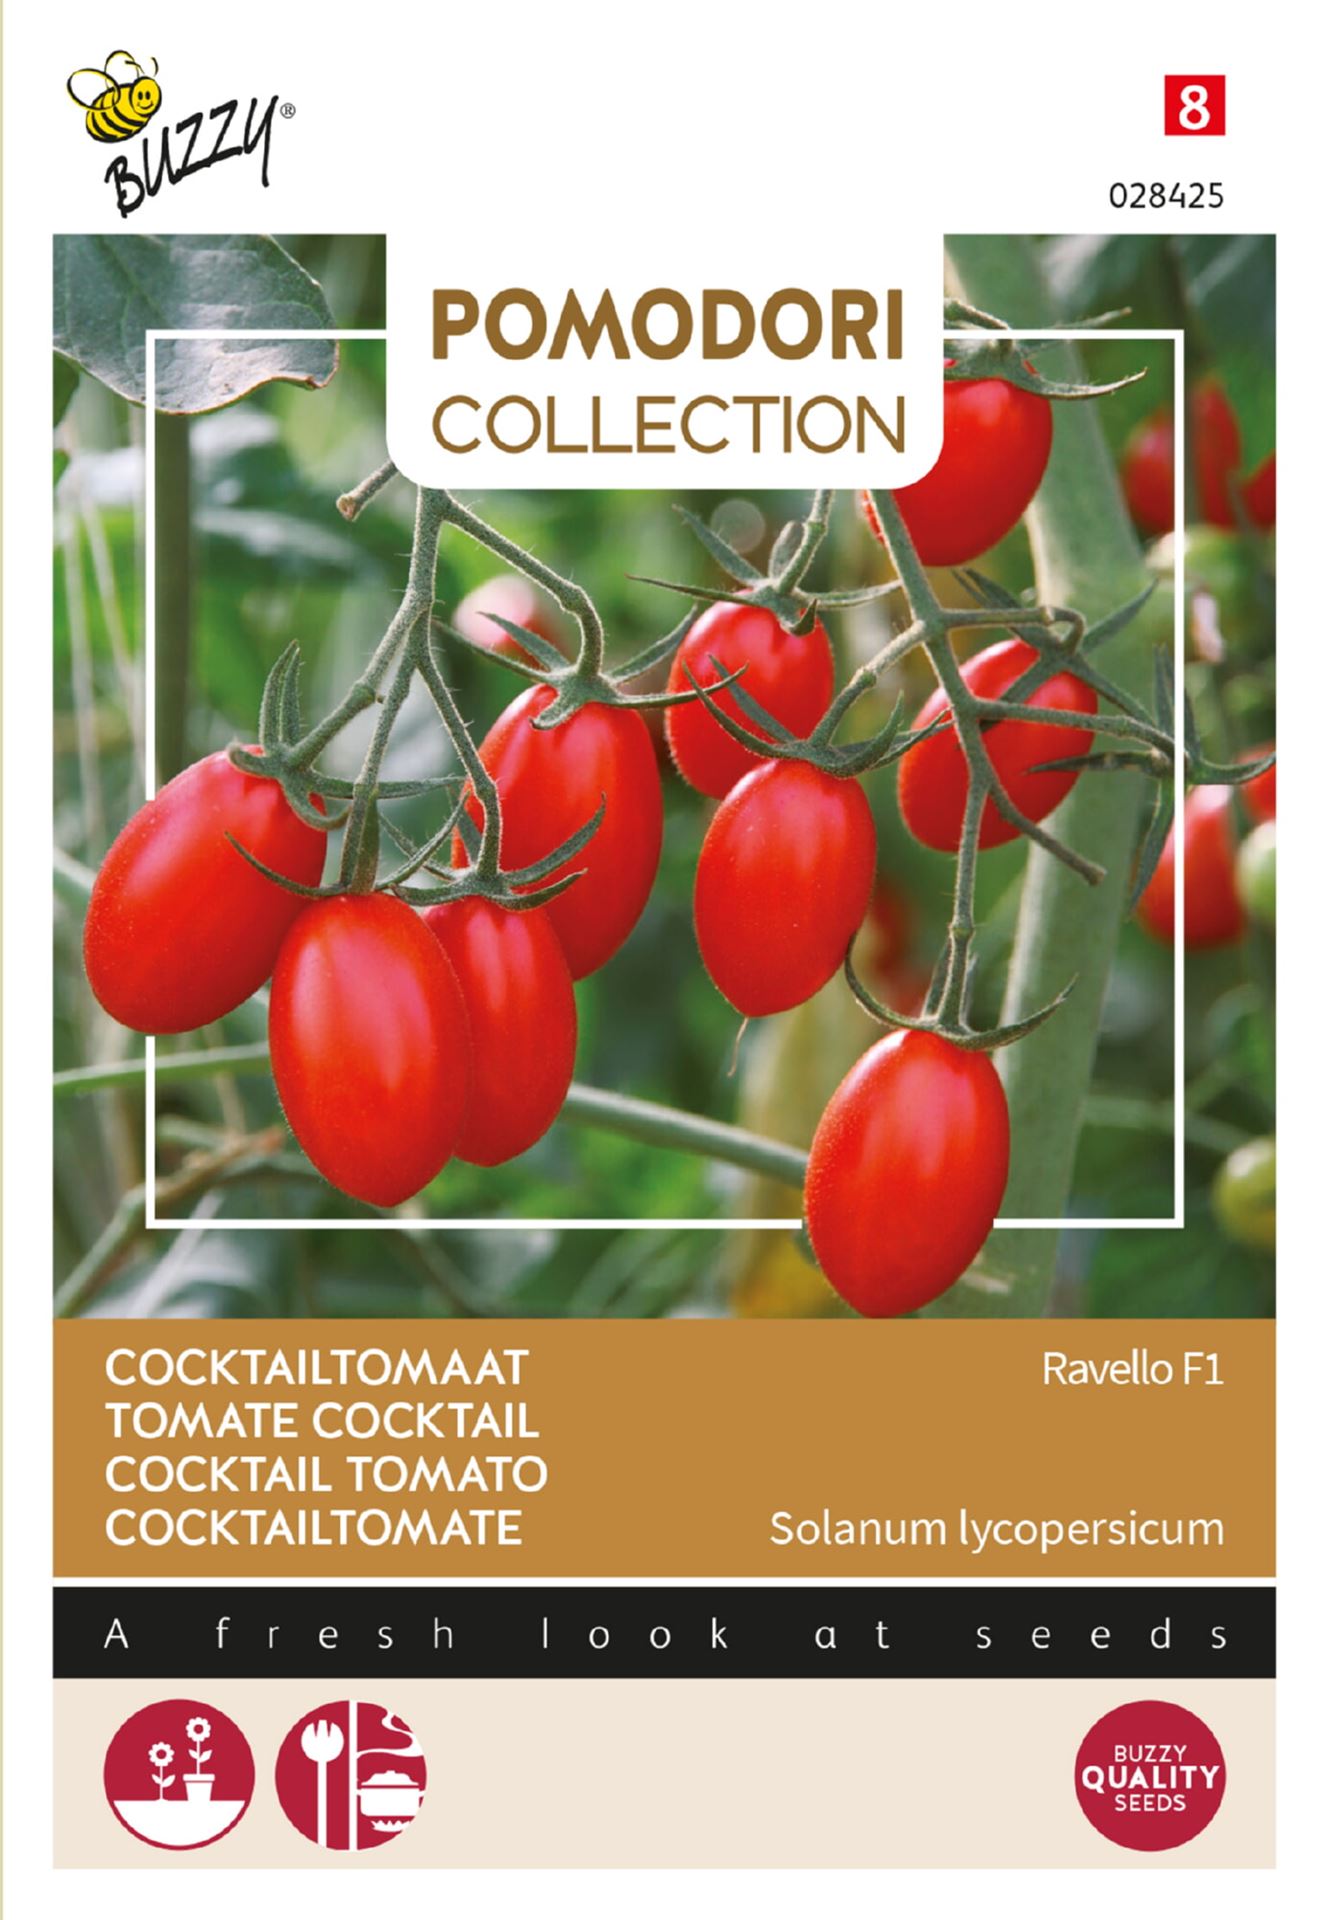 Pomodori Ravello F1 (tomate cocktail)